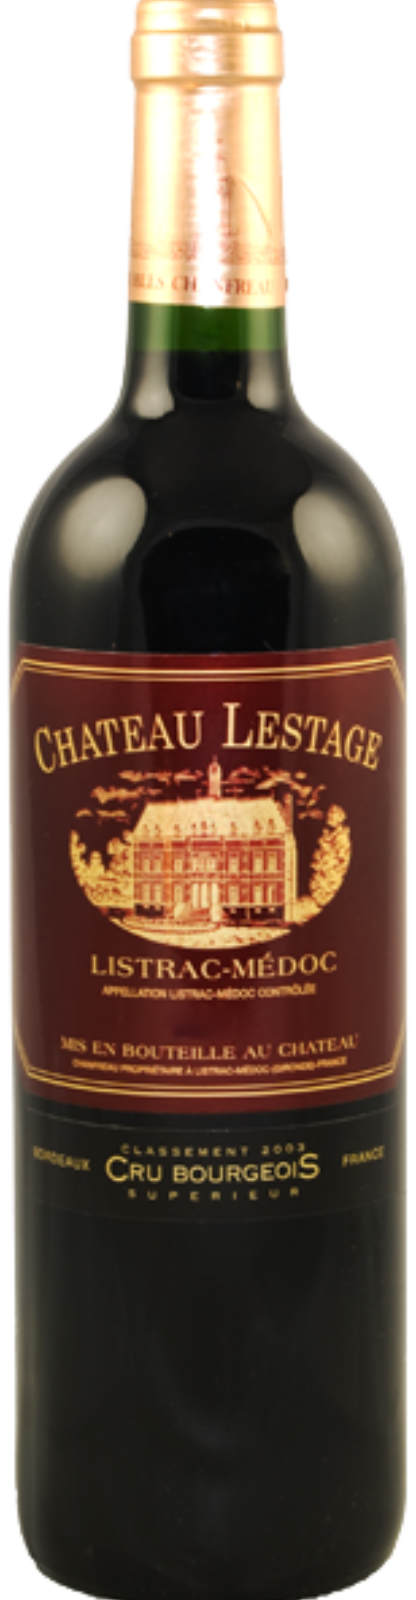 Château LESTAGE - Listrac-Médoc A.C. 